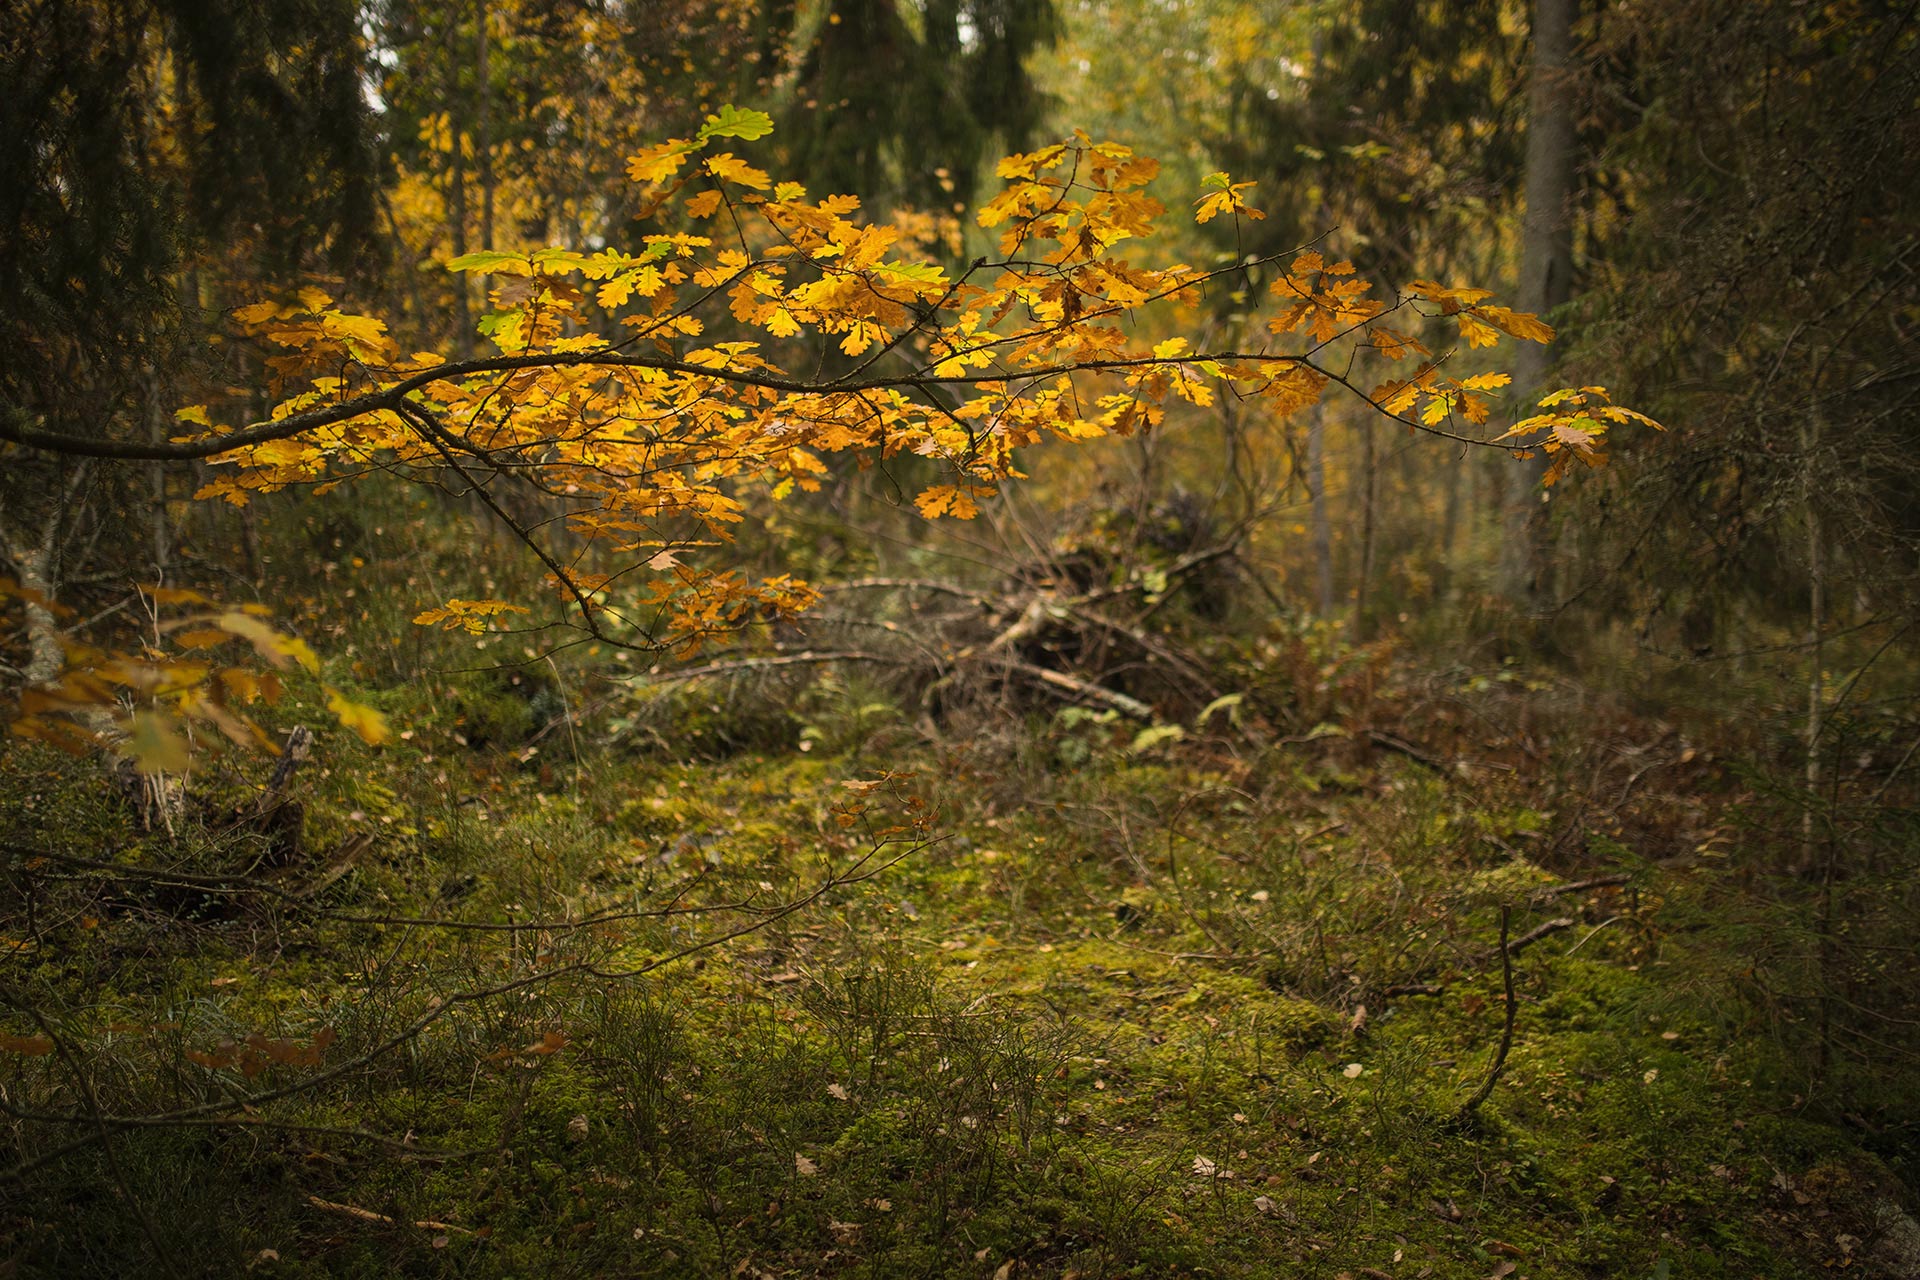 English oak branch in the autumn / Photo: A. Kuusela